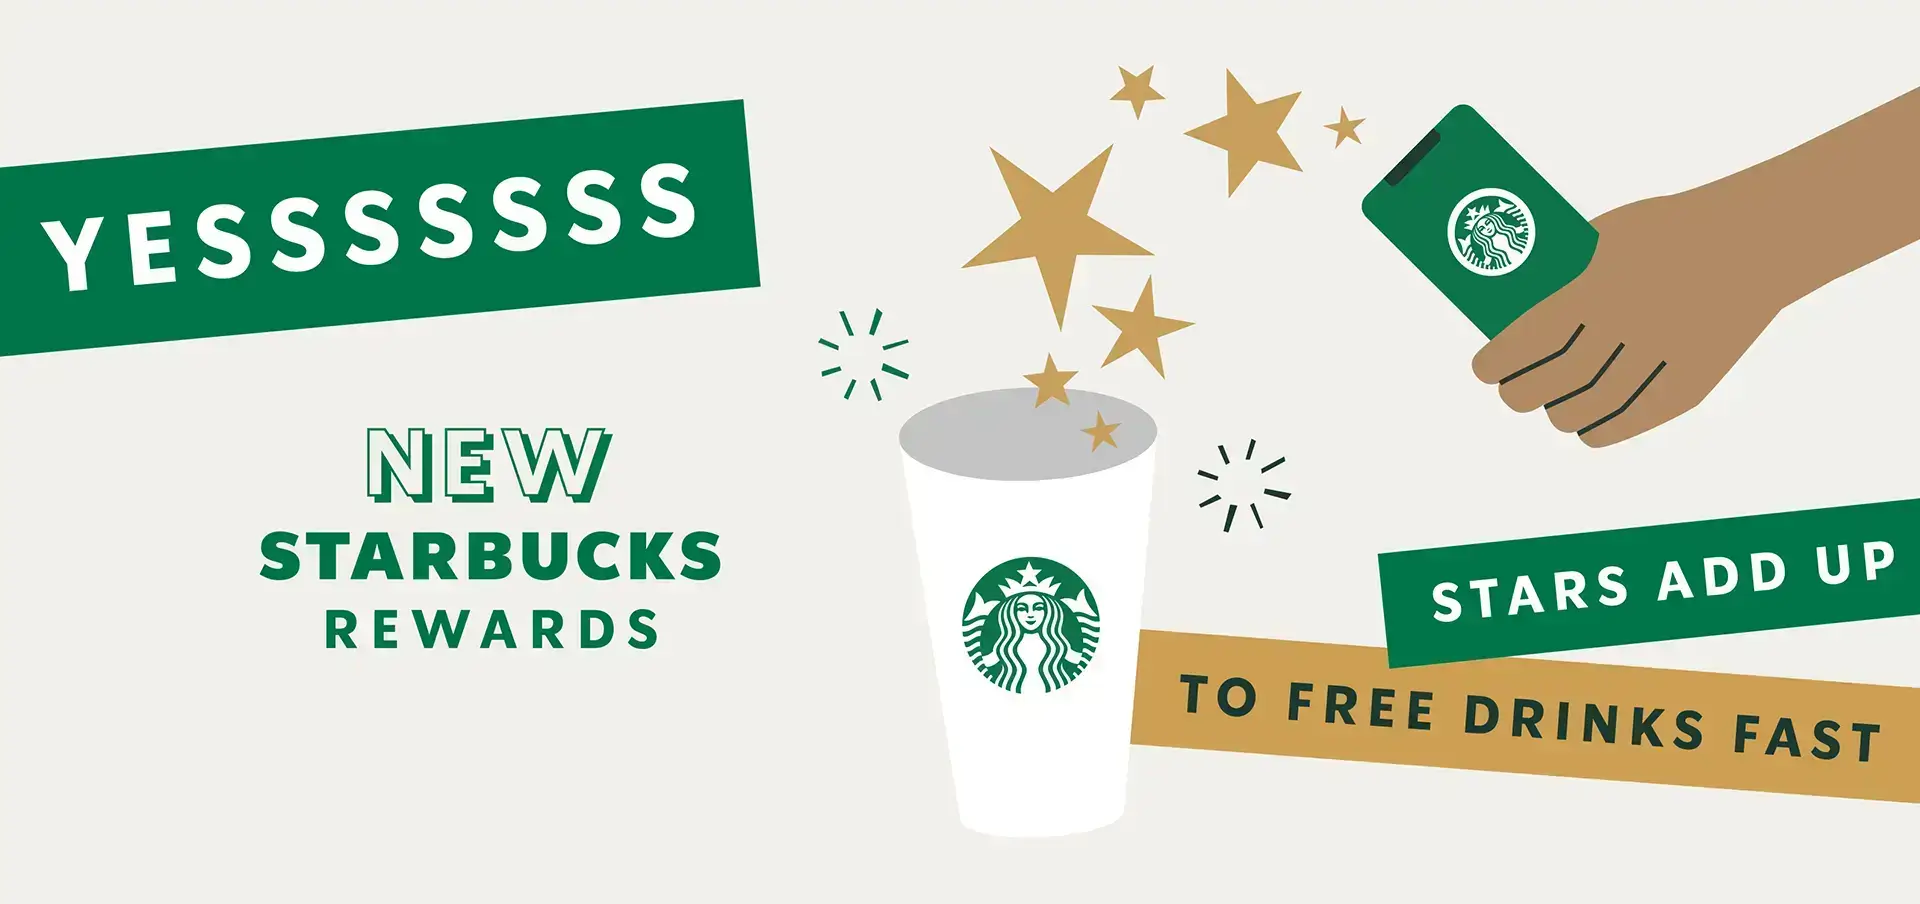 Starbucks rewards program advertisement